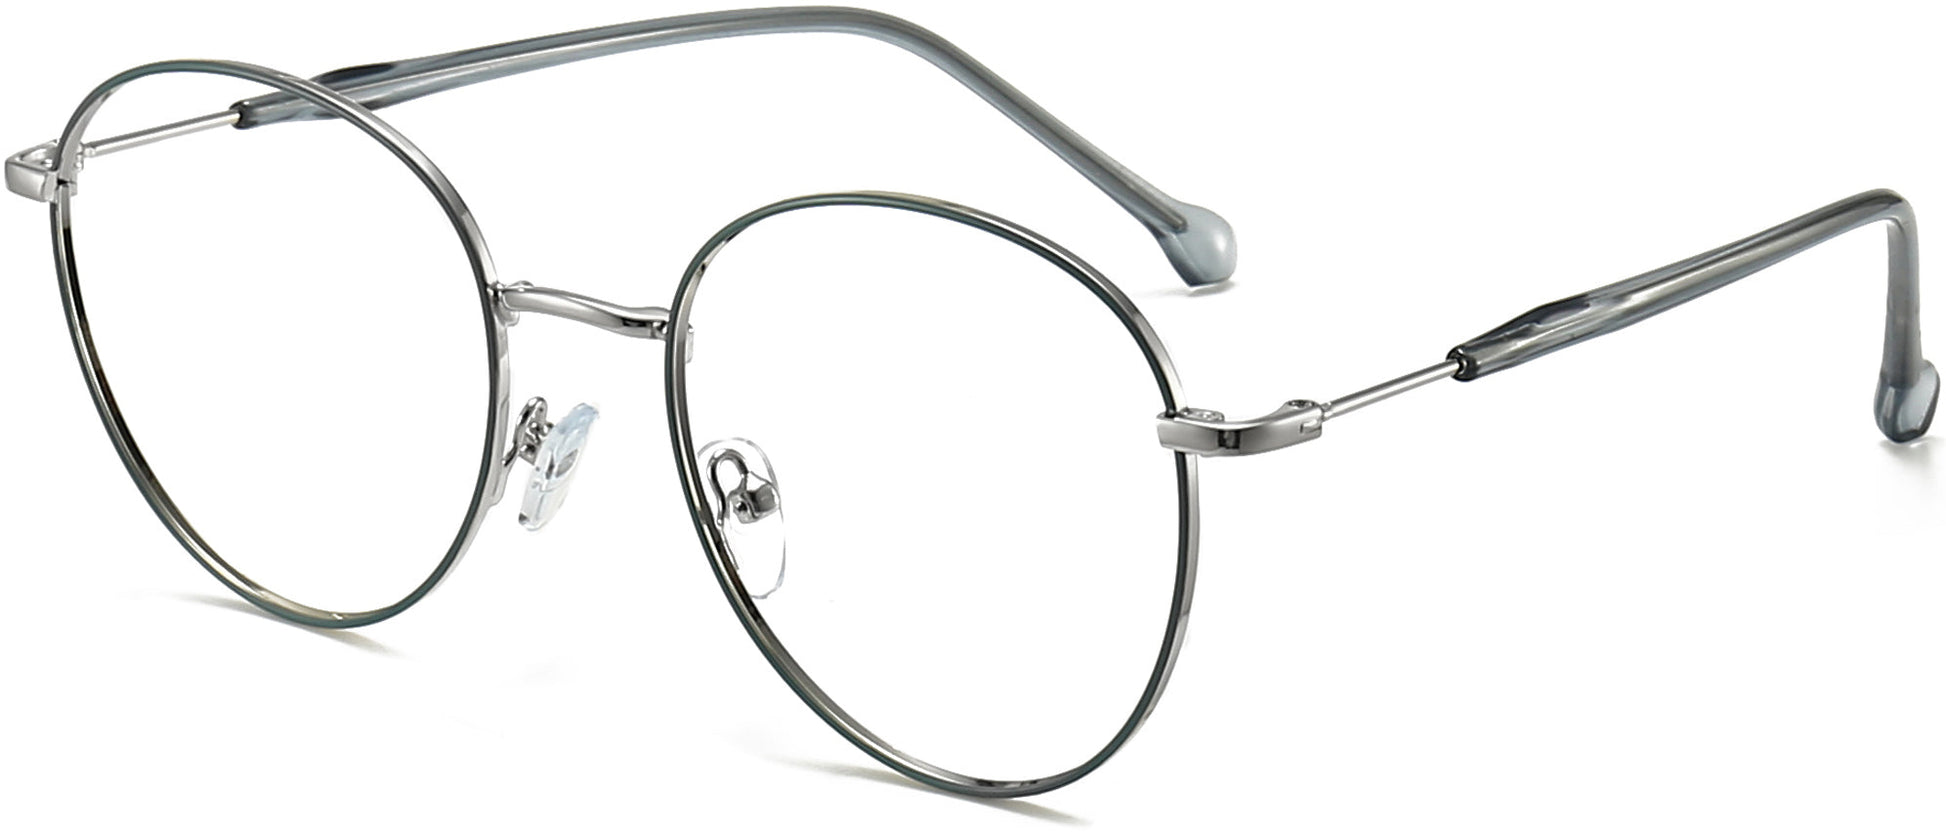 Jamari Round Silver Eyeglasses from ANRRI, angle view